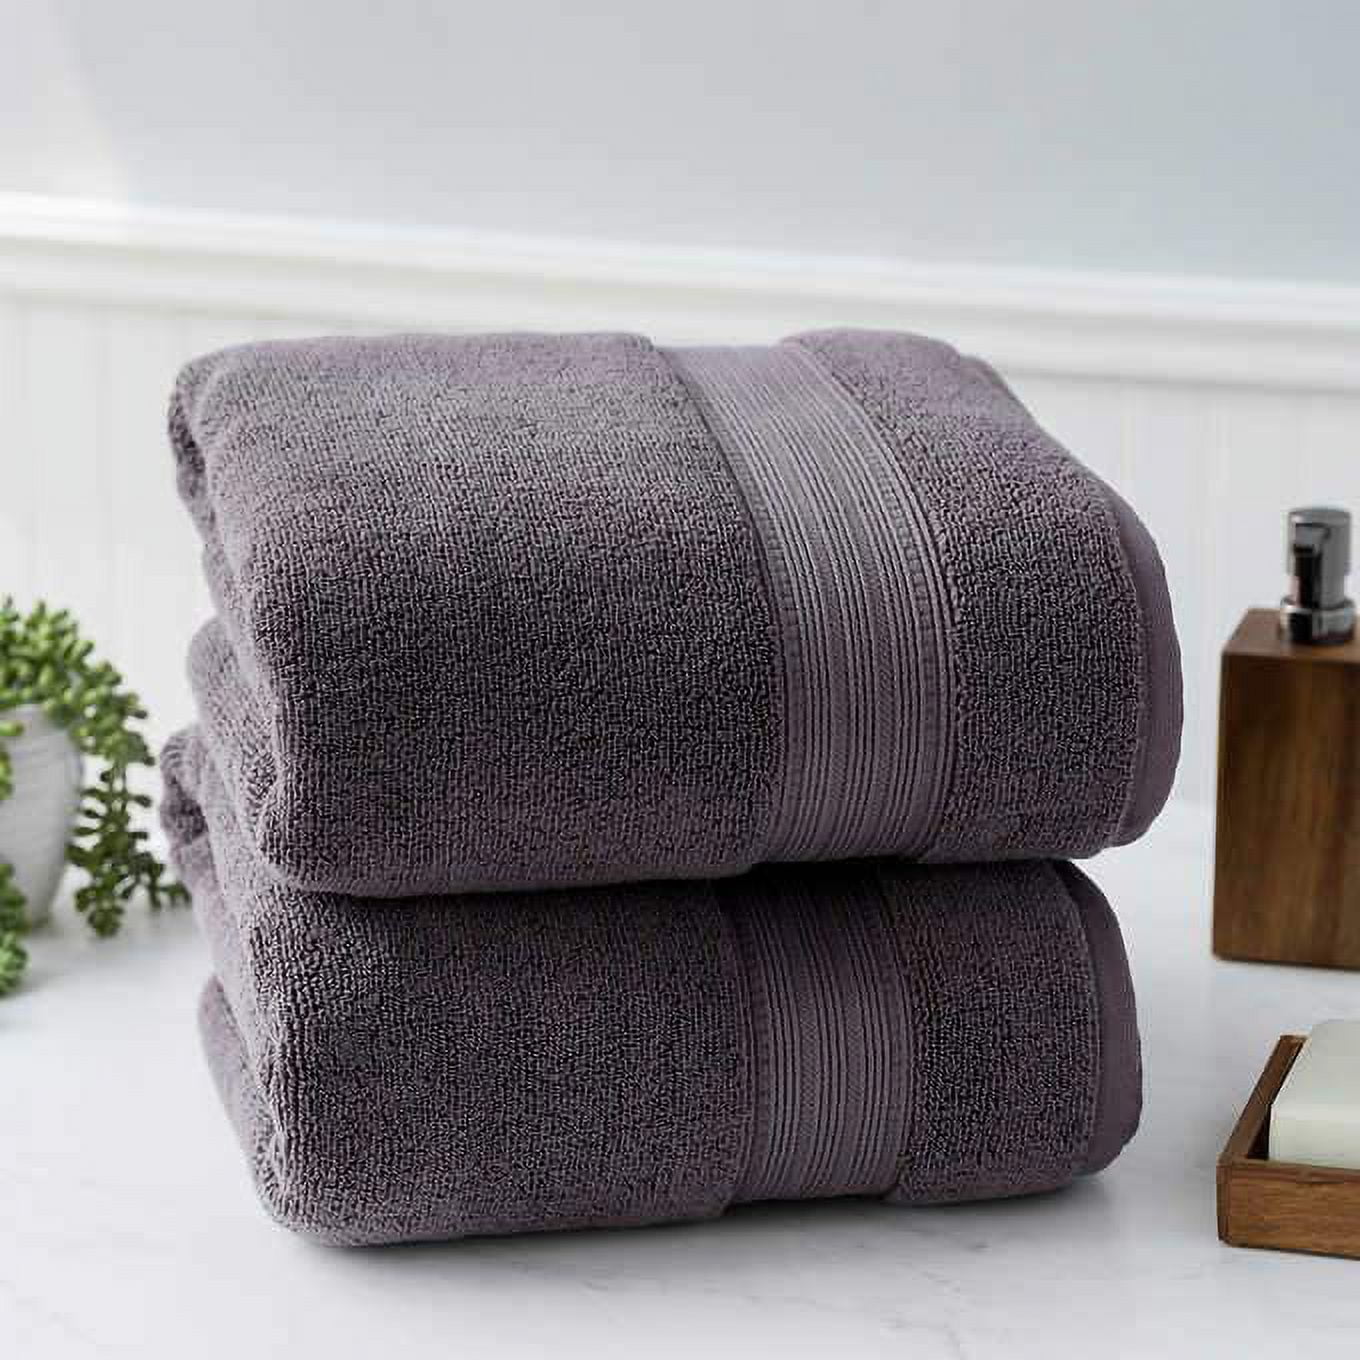 Charisma 100% Hygrocotton Towel Sets